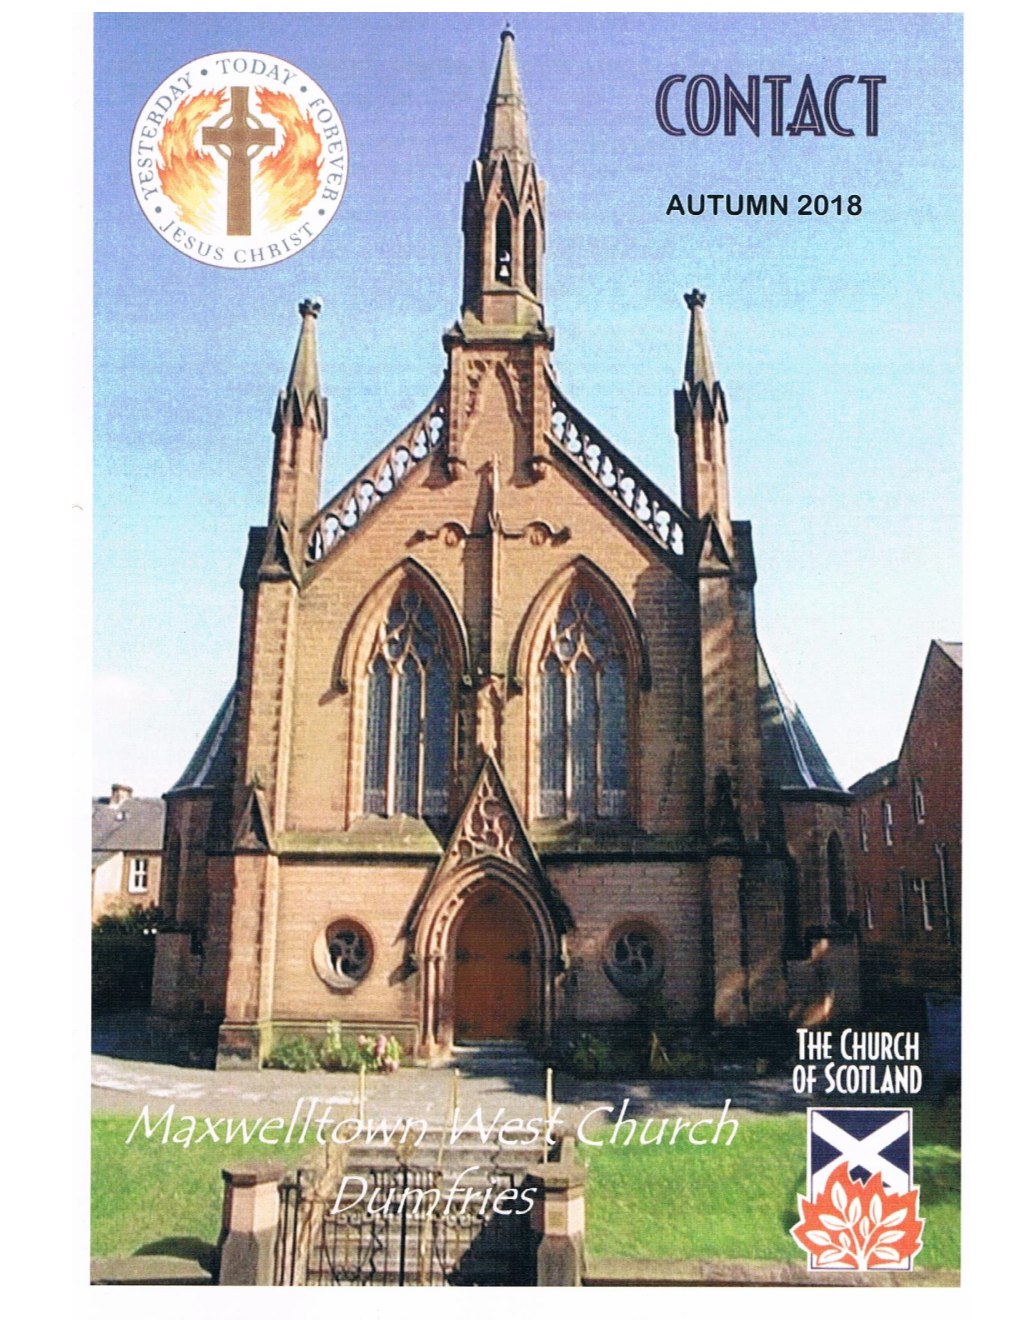 MAXWELLTOWN WEST CHURCH, DUMFRIES Scottish Charity No.: SC015925 Tel: 01387 255900